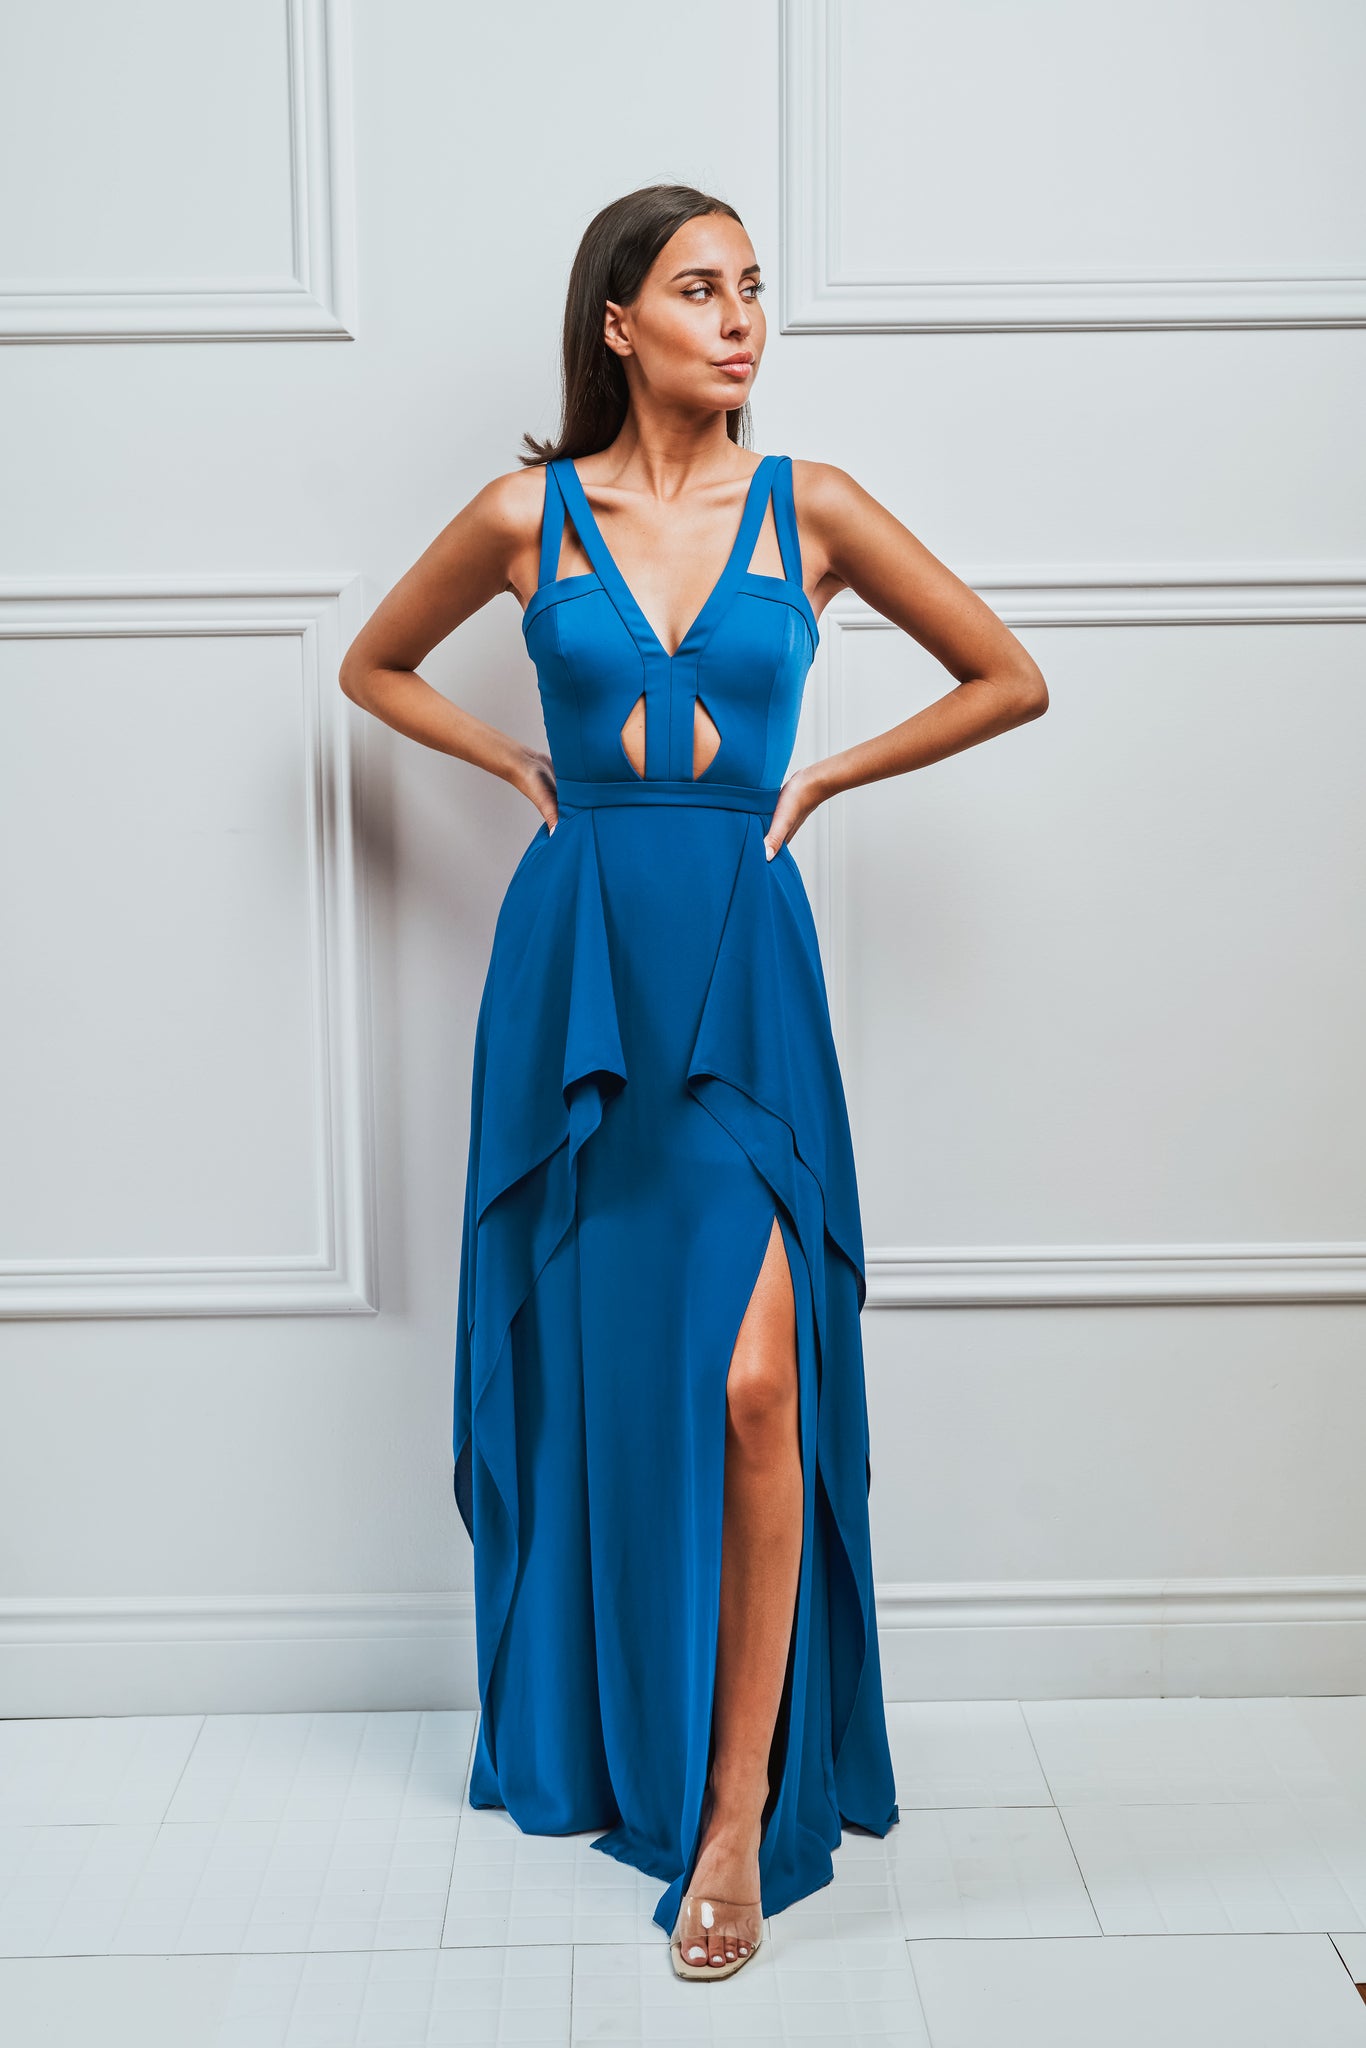 Long Blue Dress - Rental 